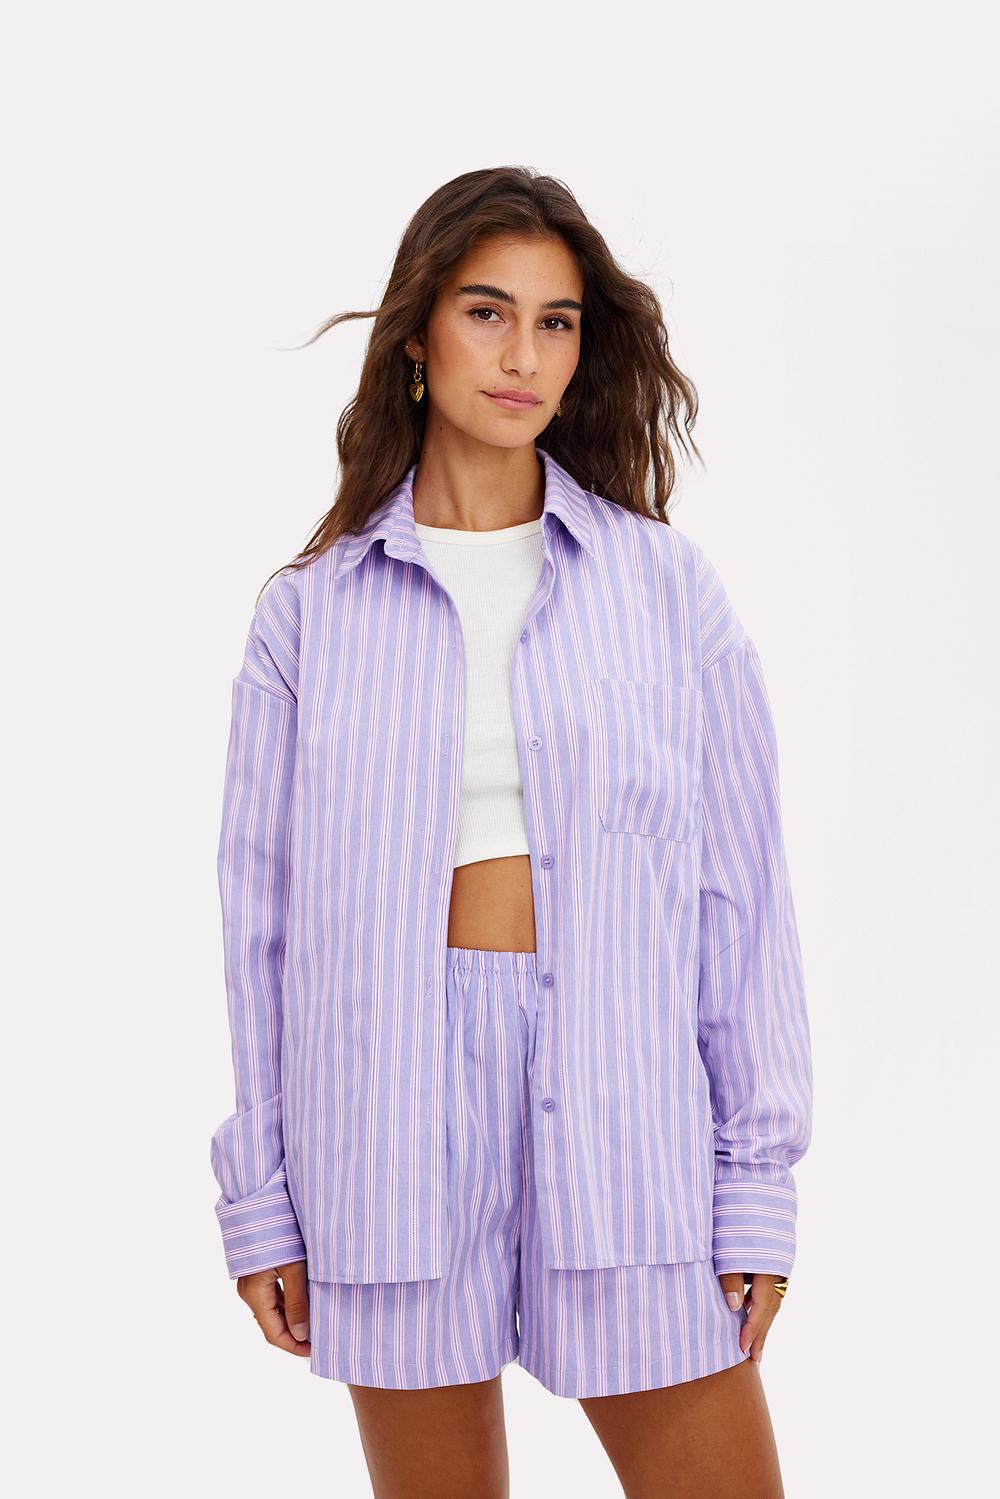 Light purple blouse with stripes